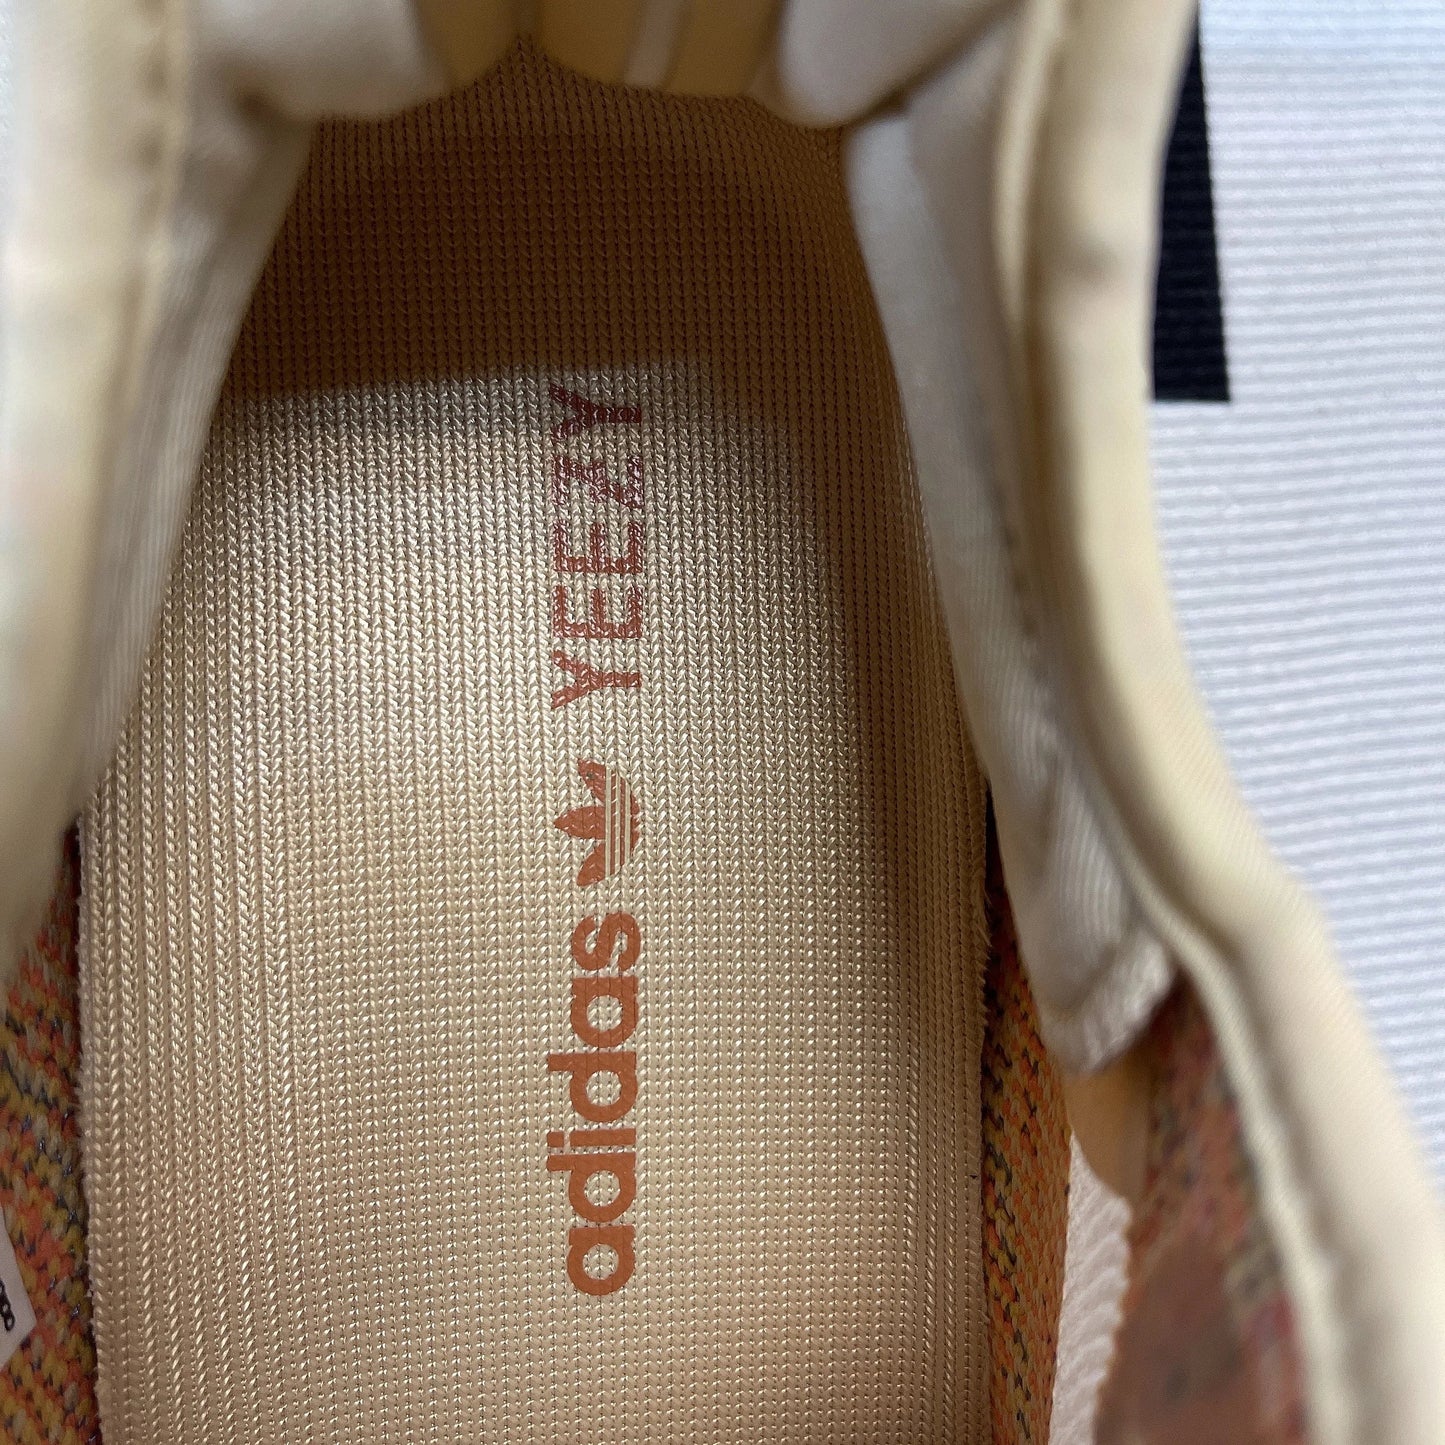 REP VERSION: MX Oat Yeezy Boost 350 V2-Running Shoes-KicksOnDeck